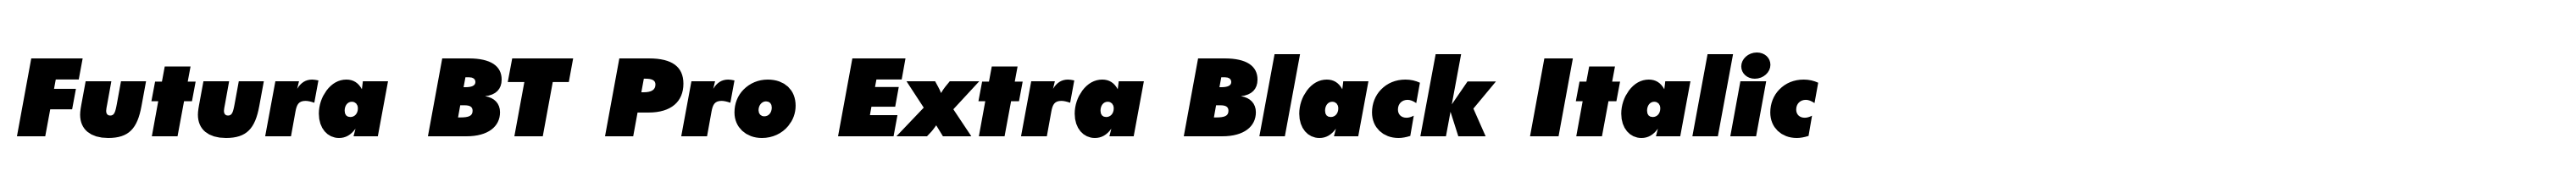 Futura BT Pro Extra Black Italic